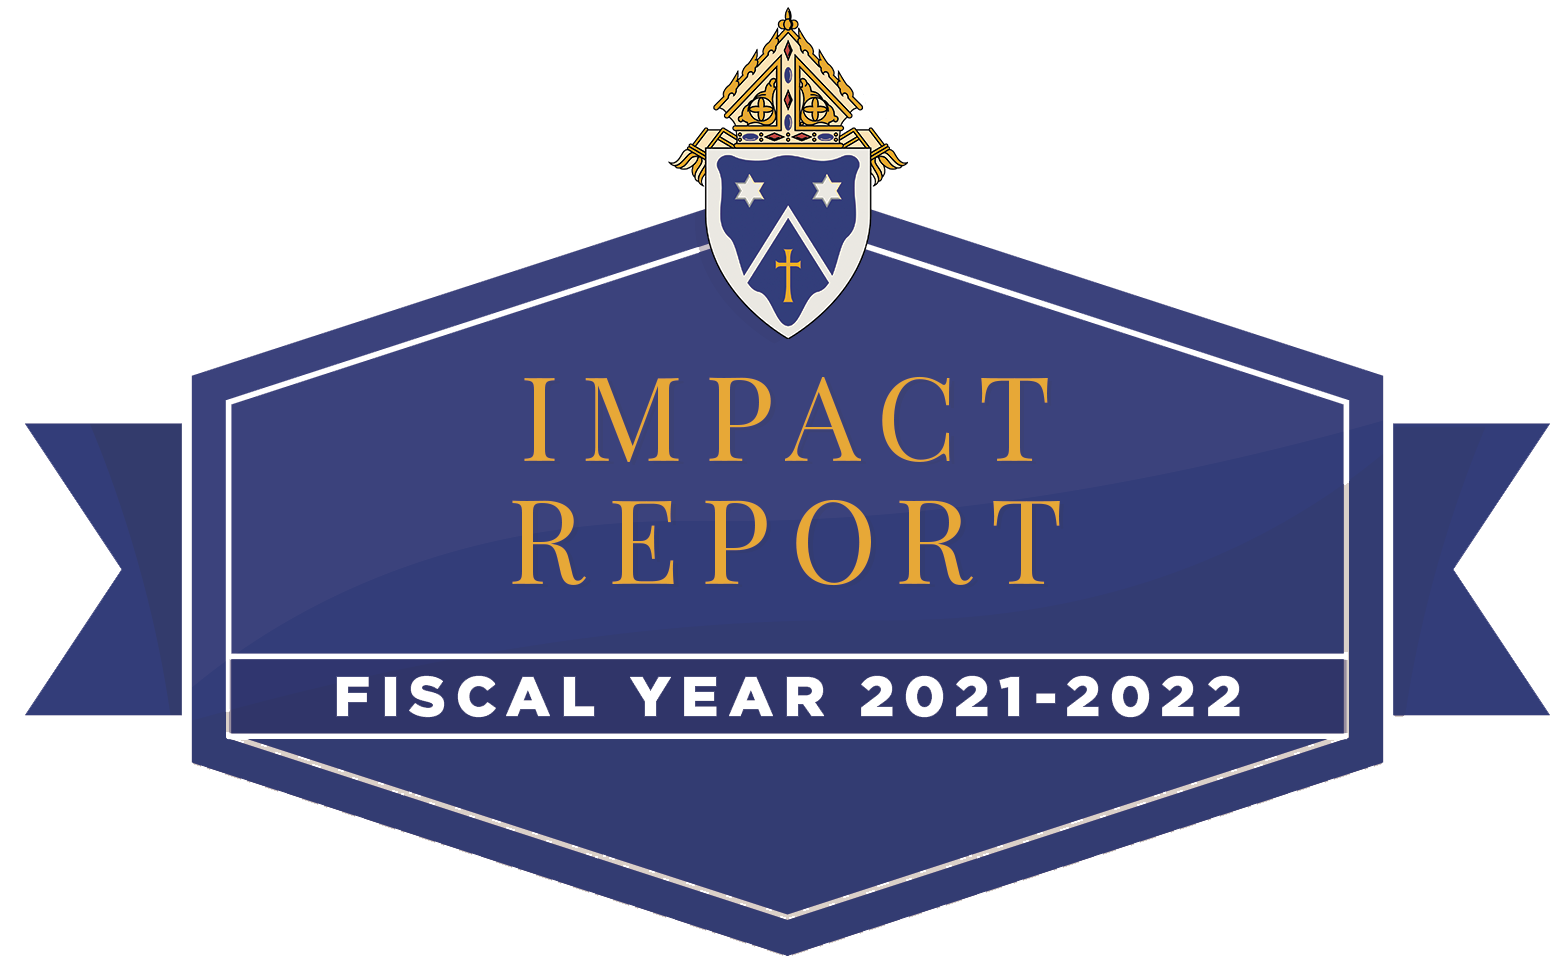 Impact Report image